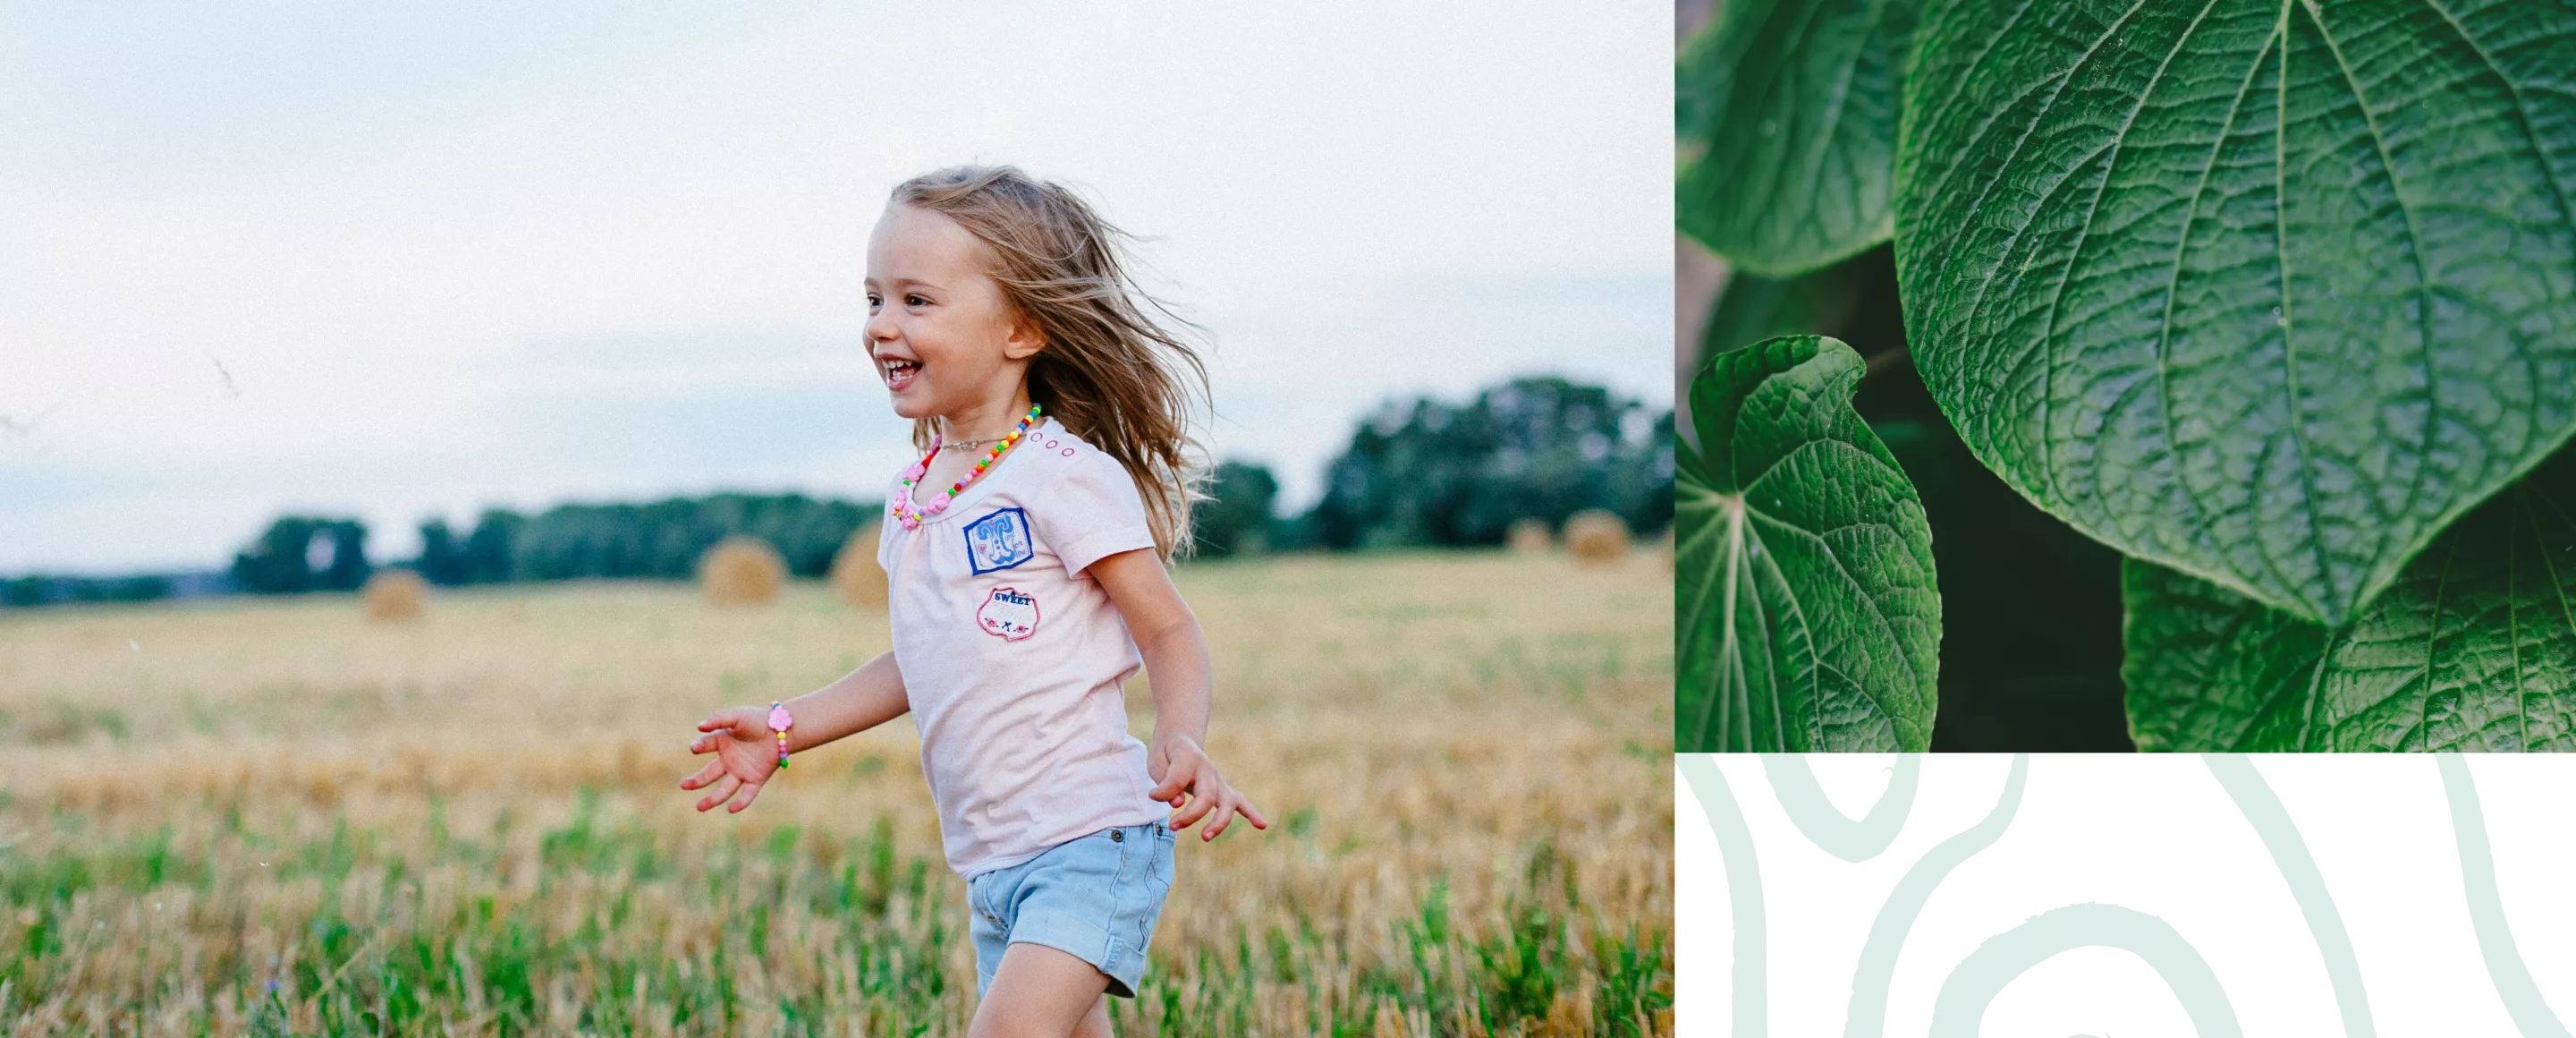 girl running in a field, plants